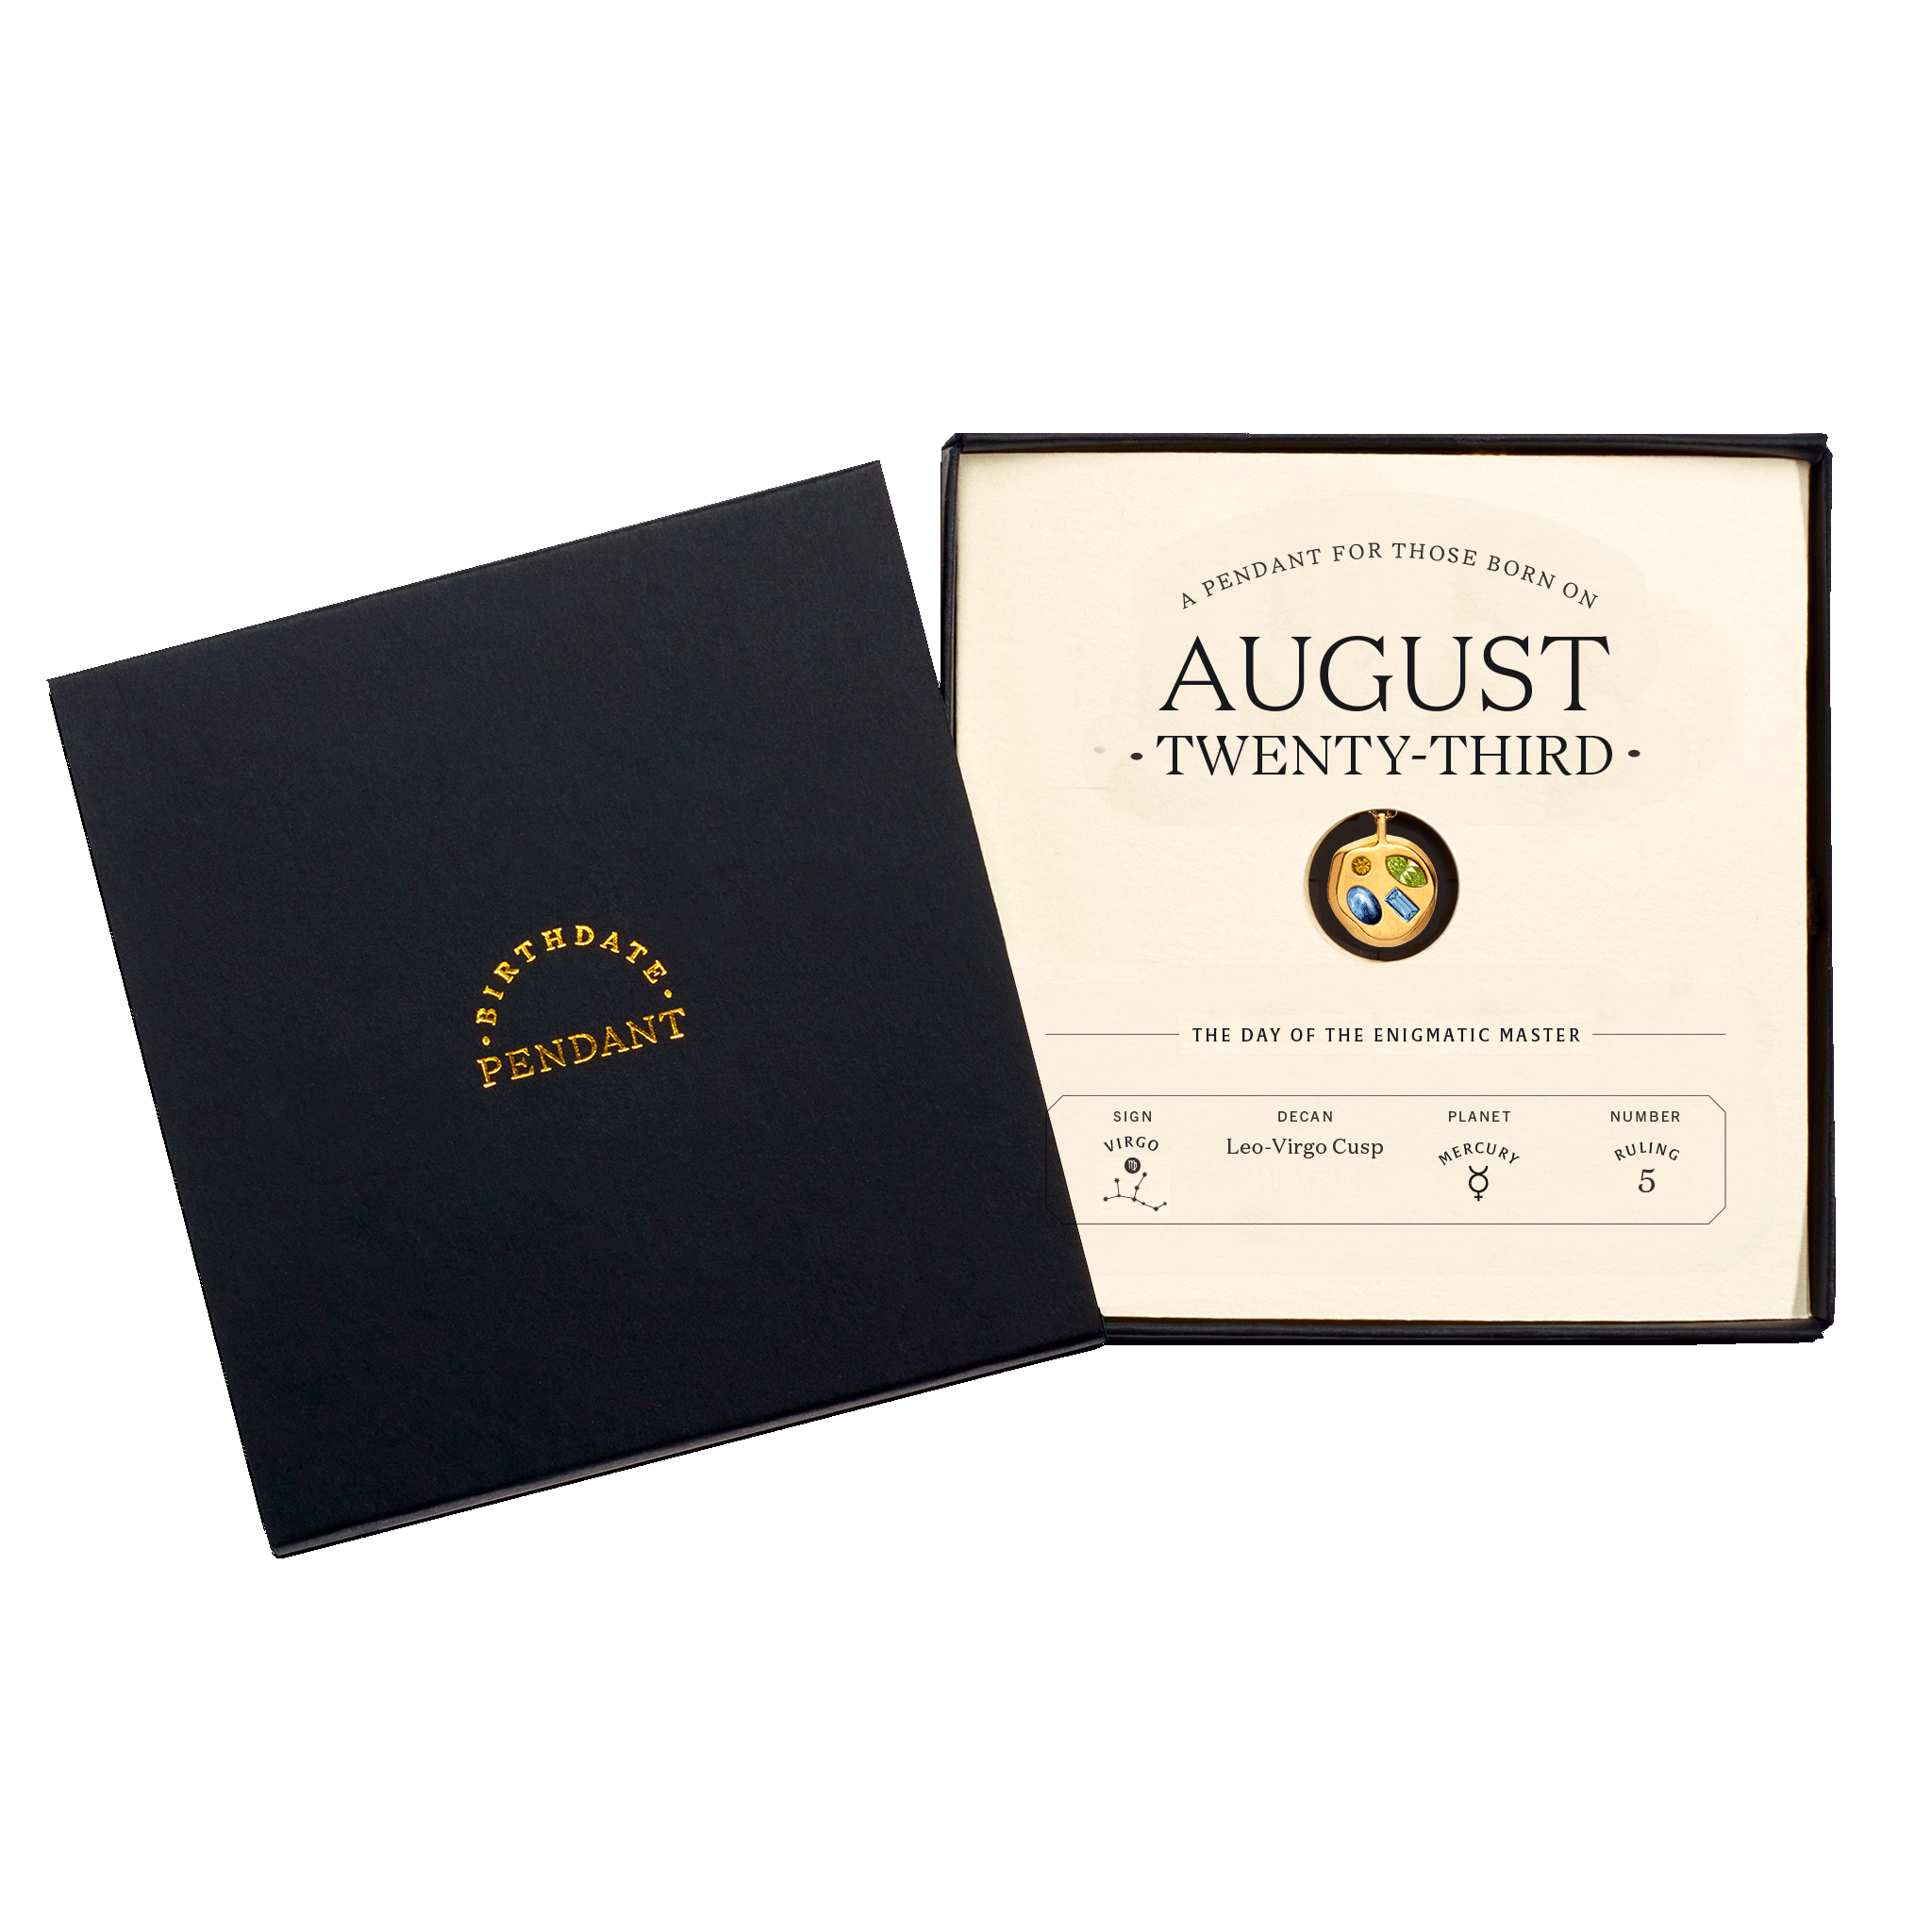 The August Twenty-Third Pendant inside its box